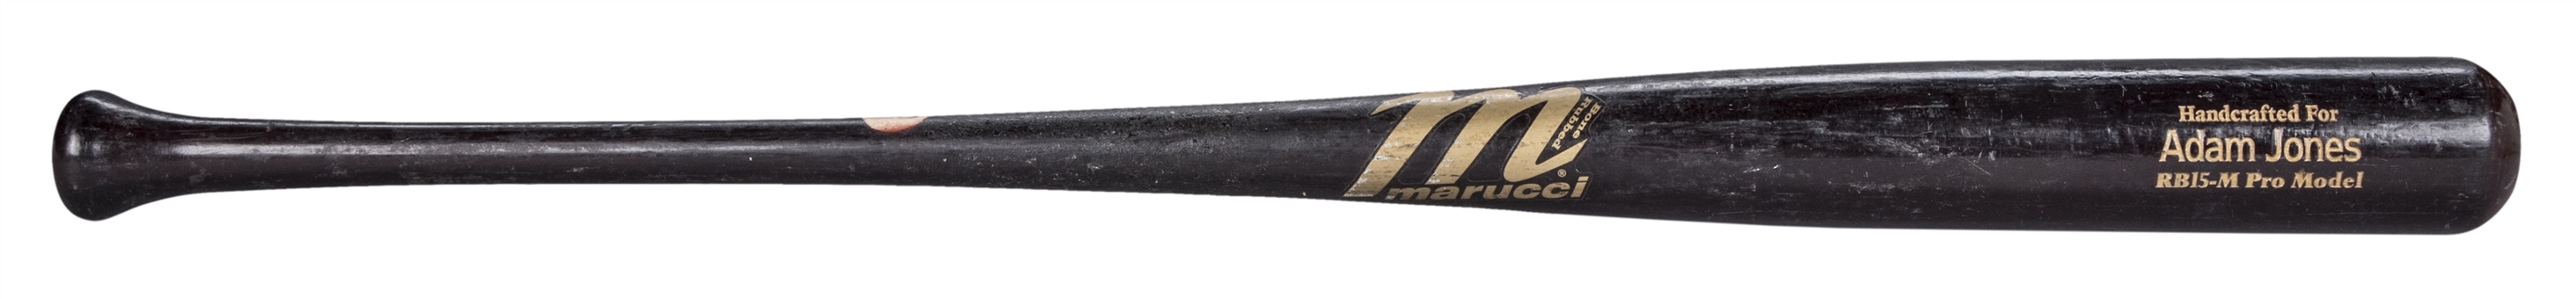 2011 Adam Jones Game Used Marucci RB15-M Model Bat (PSA/DNA GU 9)